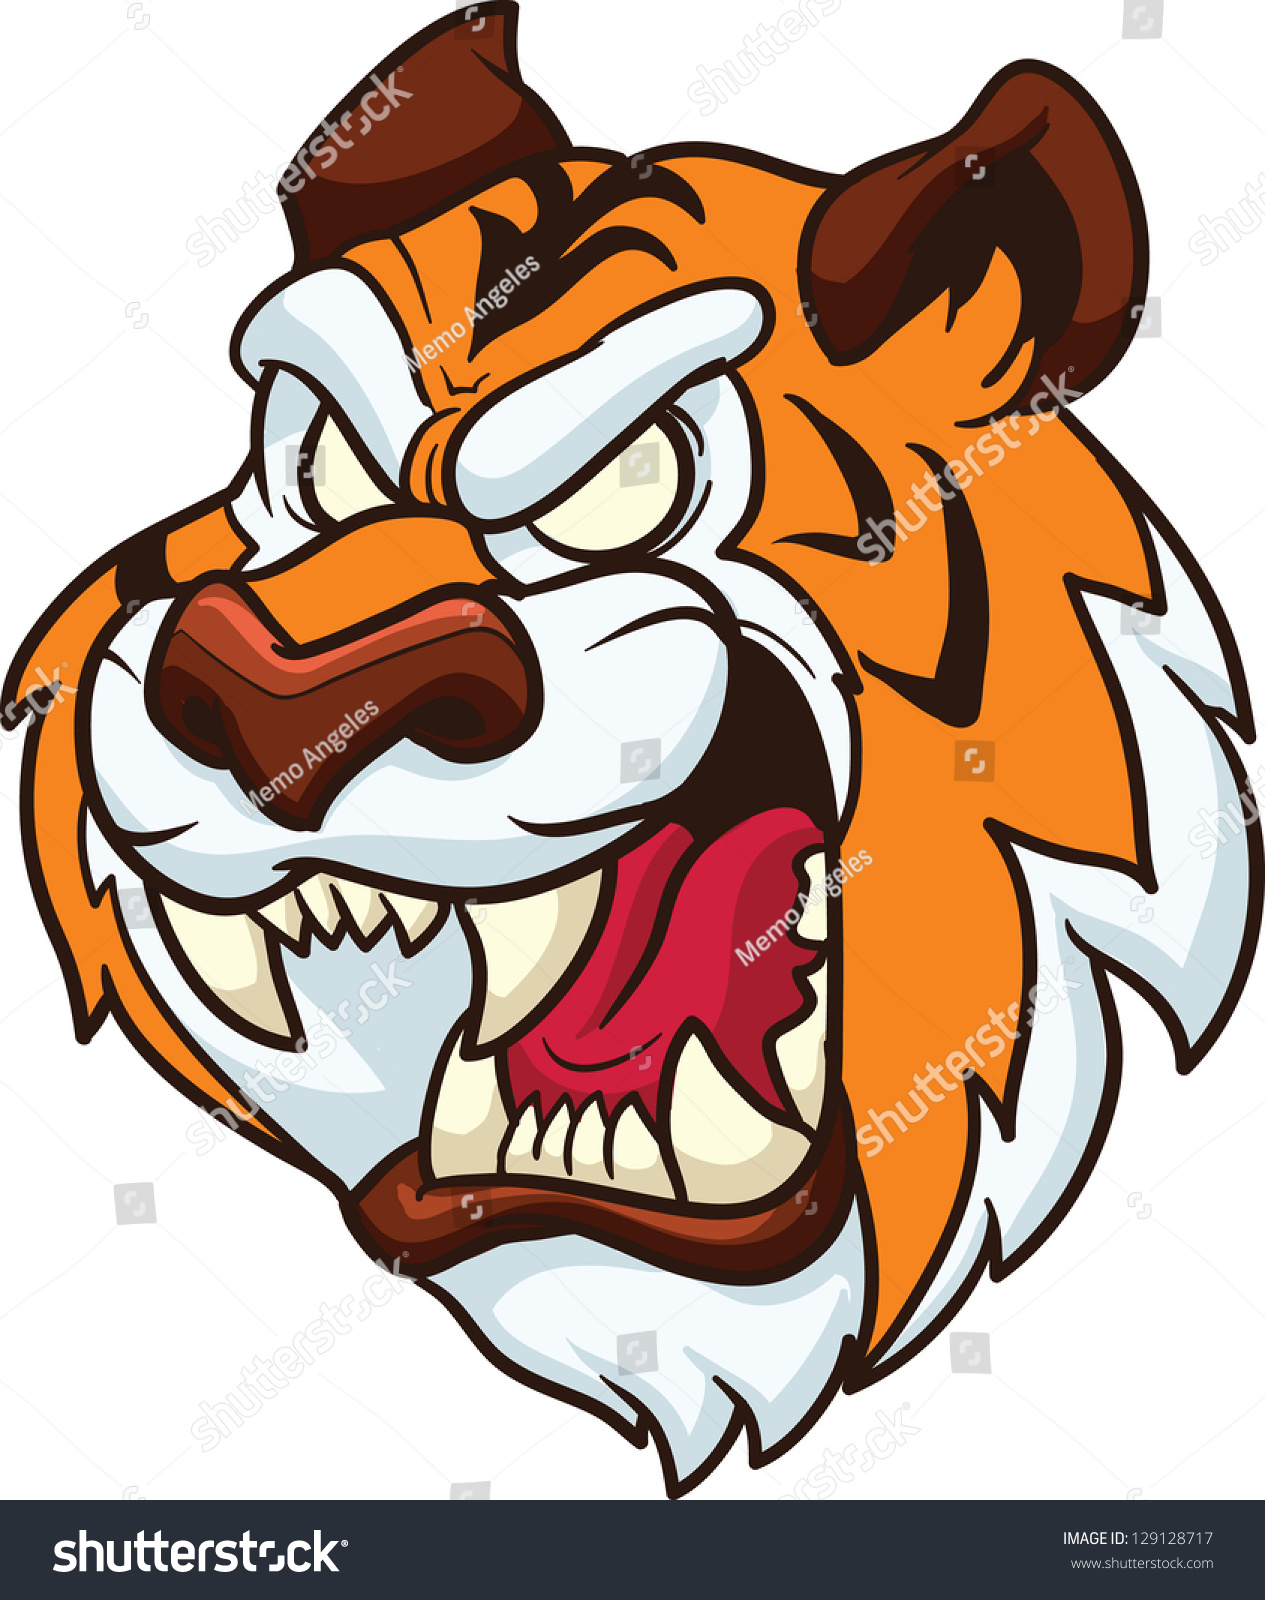 tiger roar clipart - photo #45